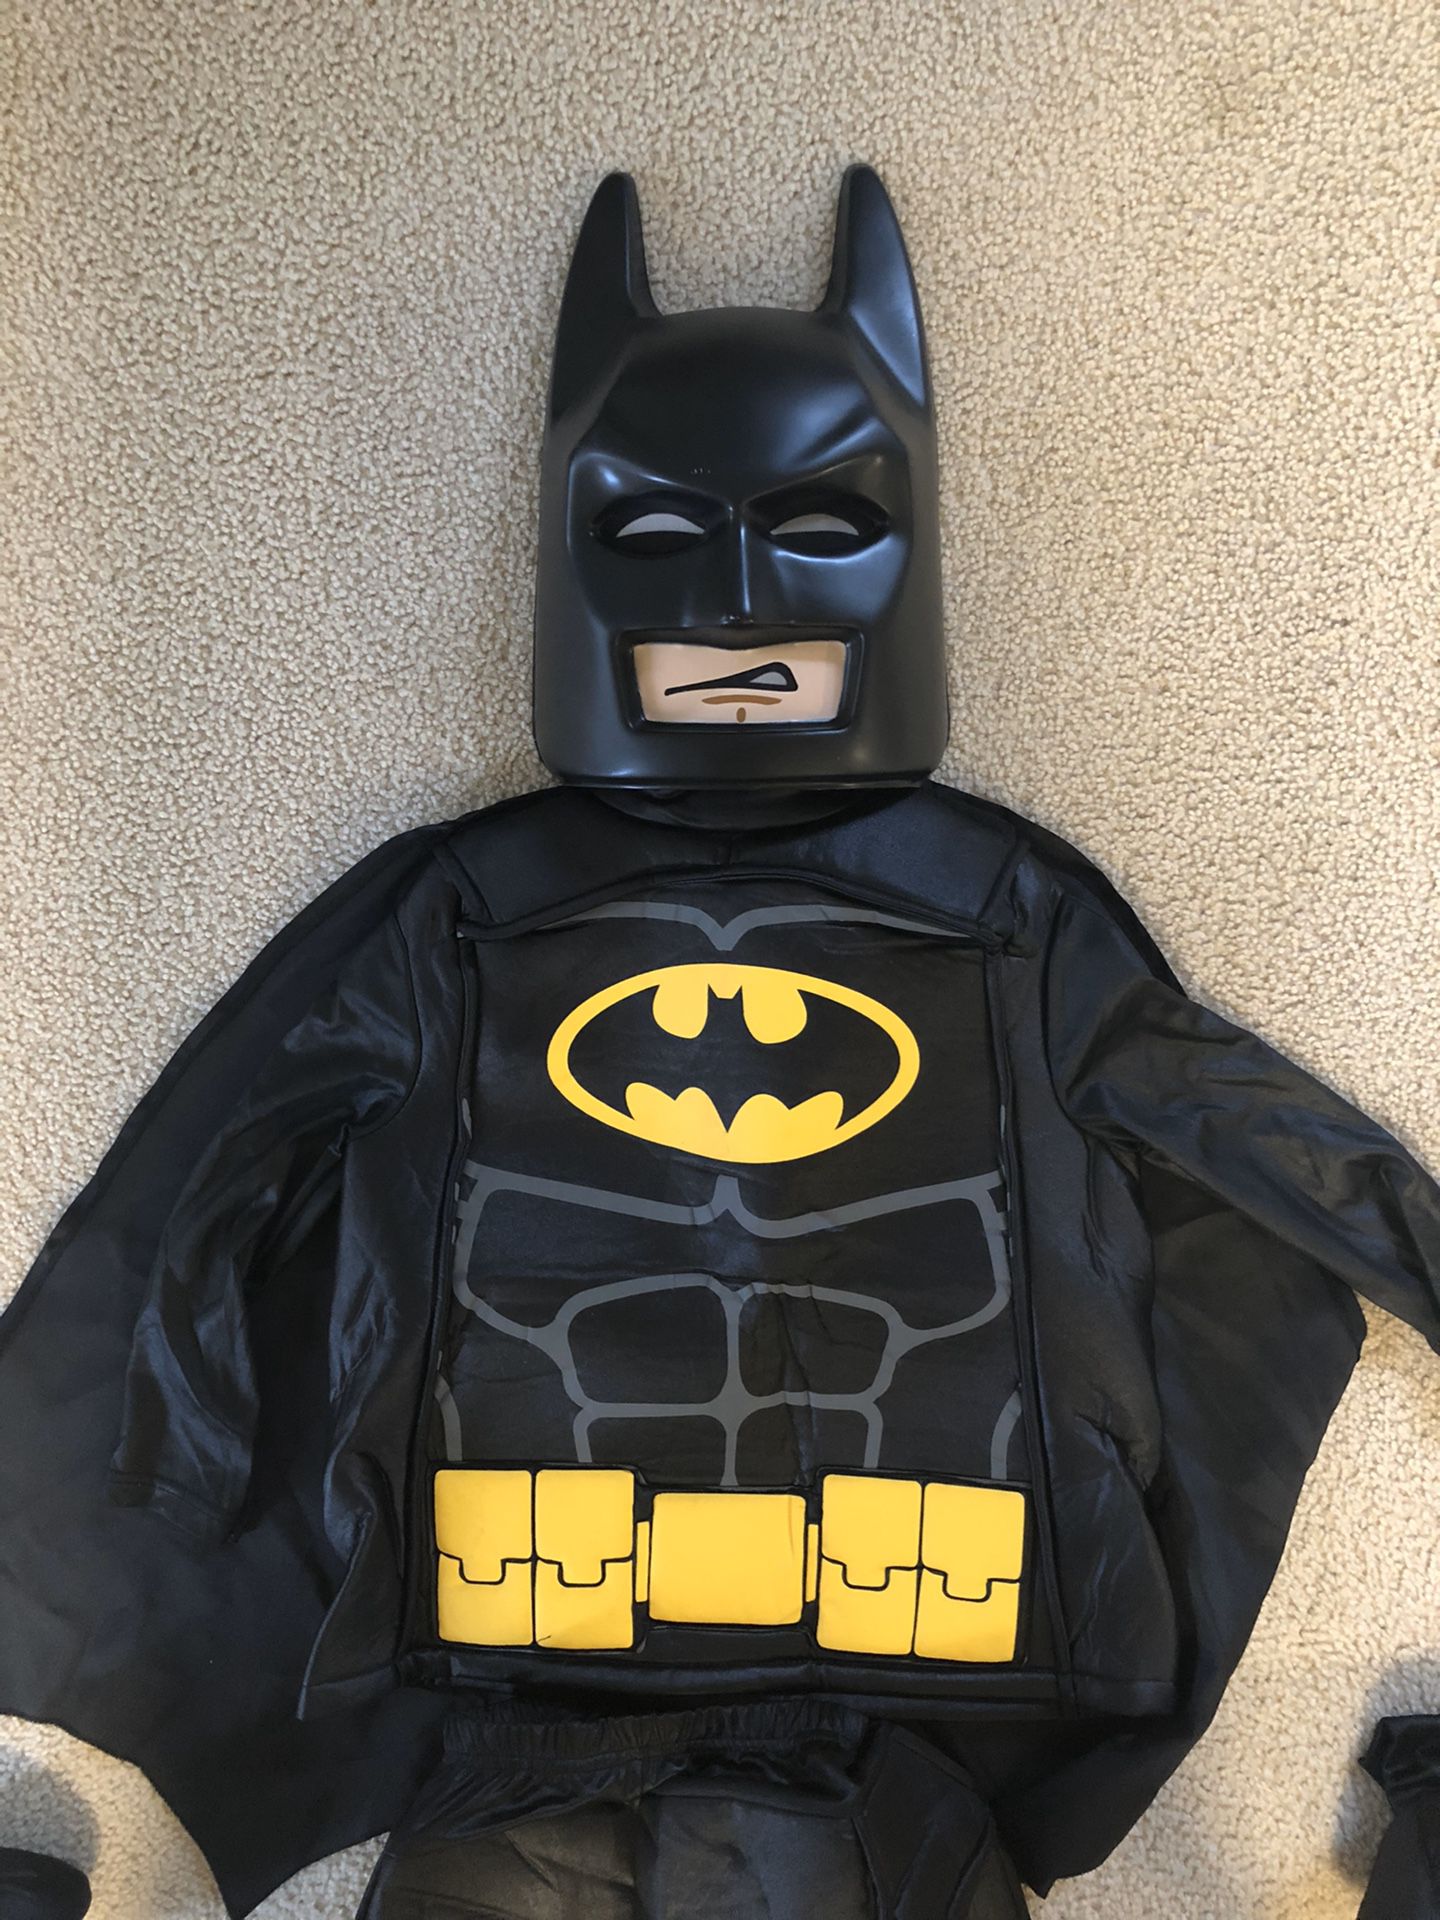 Kids Lego Batman Halloween costume